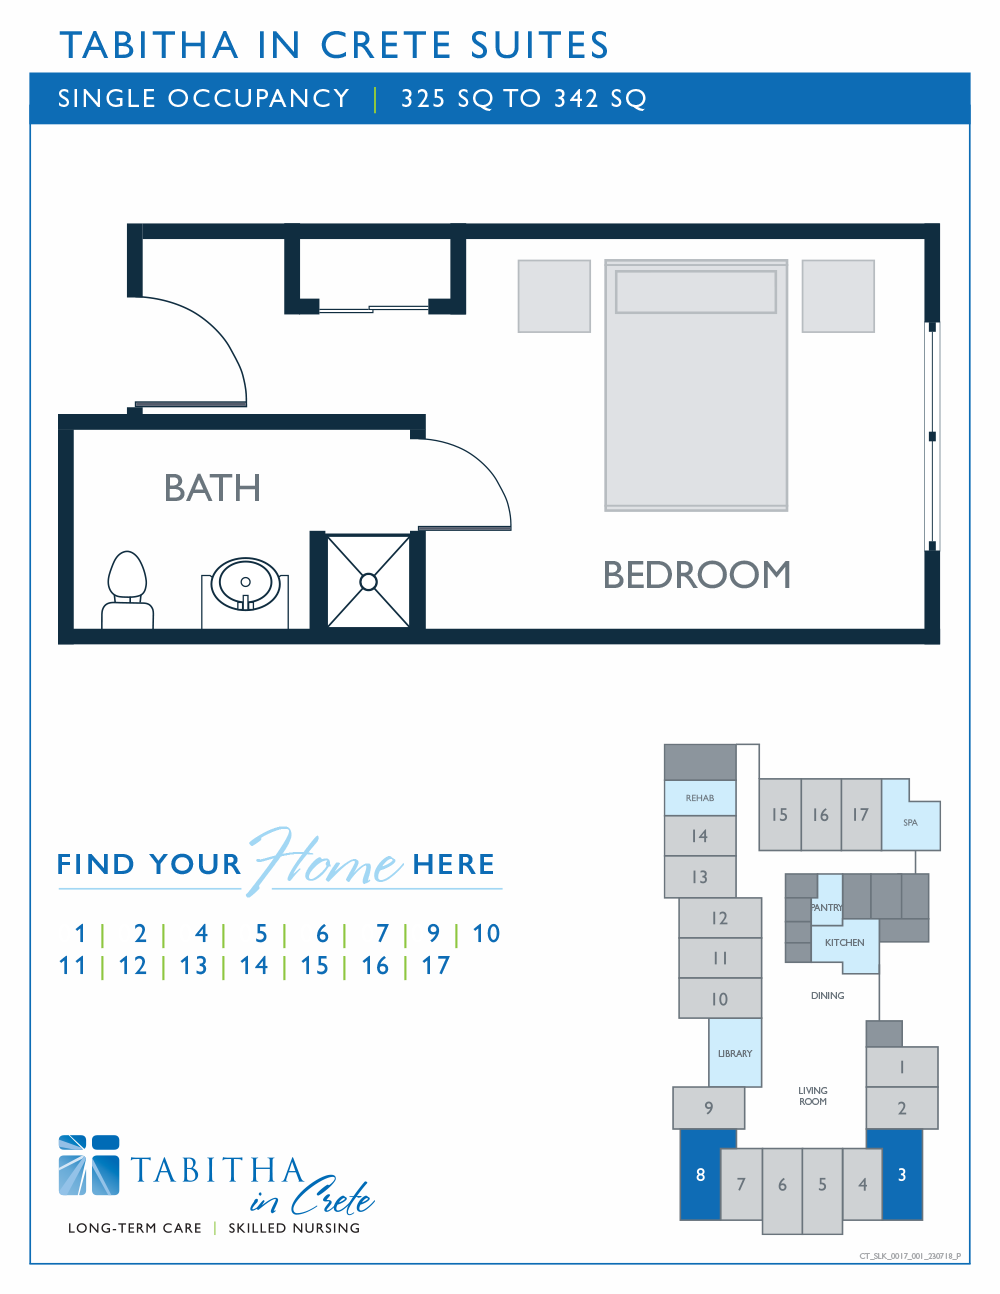 Single-occupancy Tabitha Residence suite